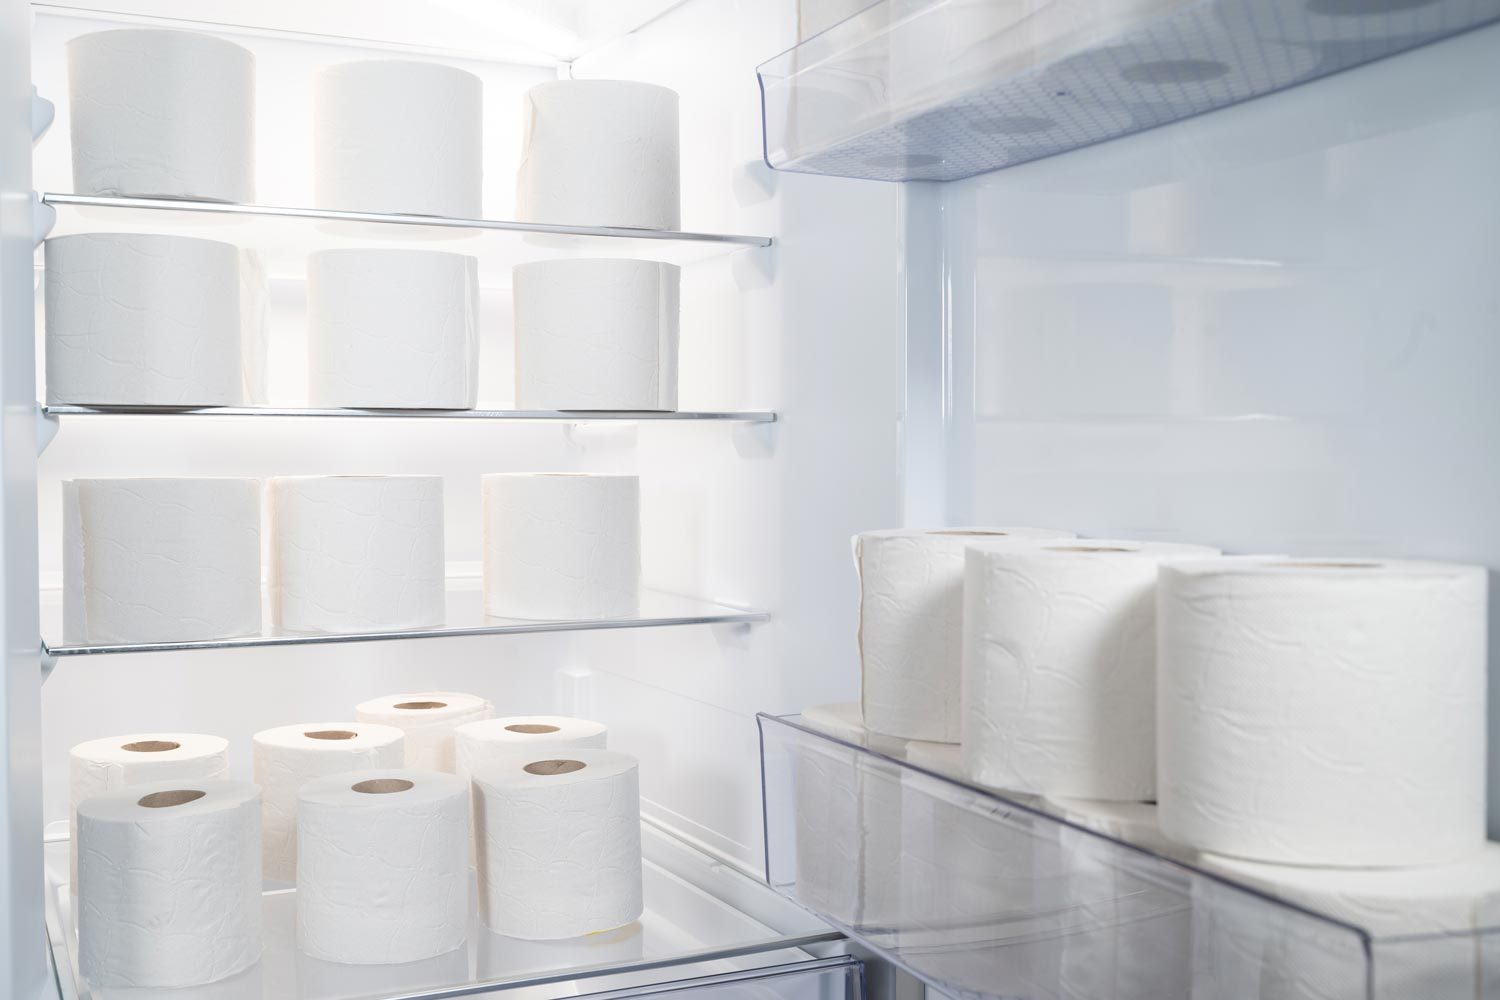 Clean Tek Professional White Plastic Standard Toilet Paper